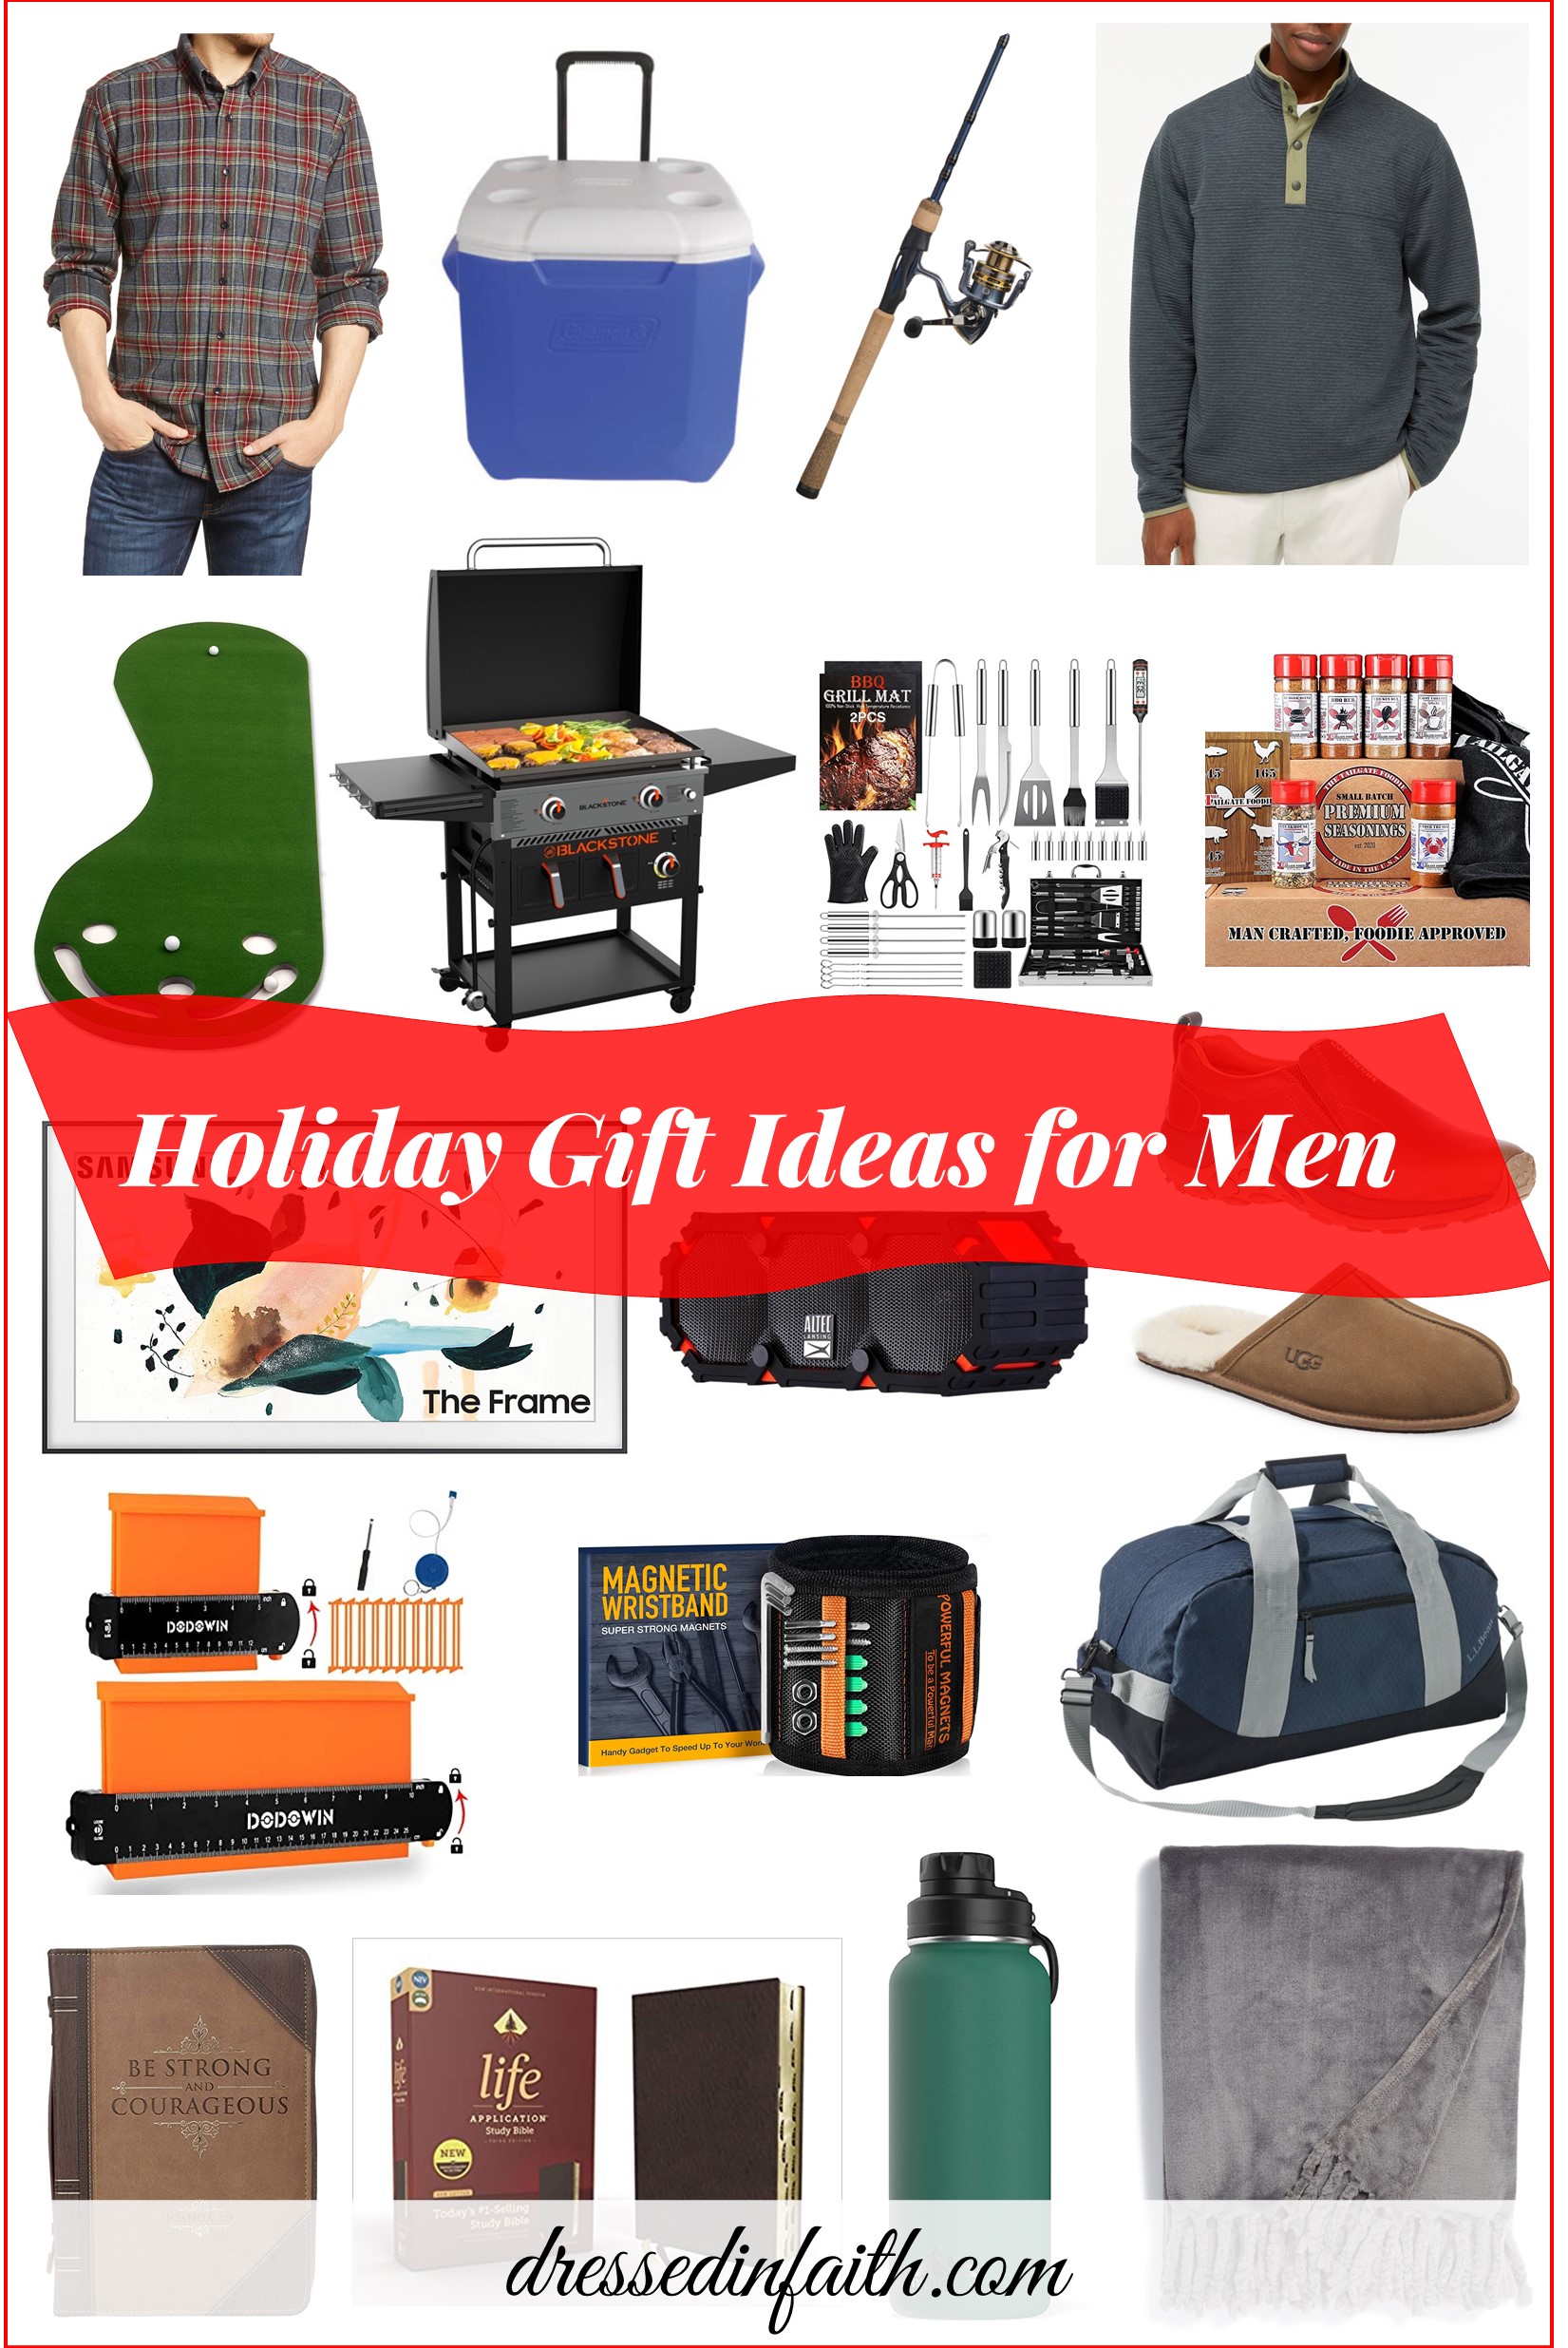 https://www.dressedinfaith.com/wp-content/uploads/2021/10/Holiday-Gift-Ideas-for-Men-Graphic.jpg